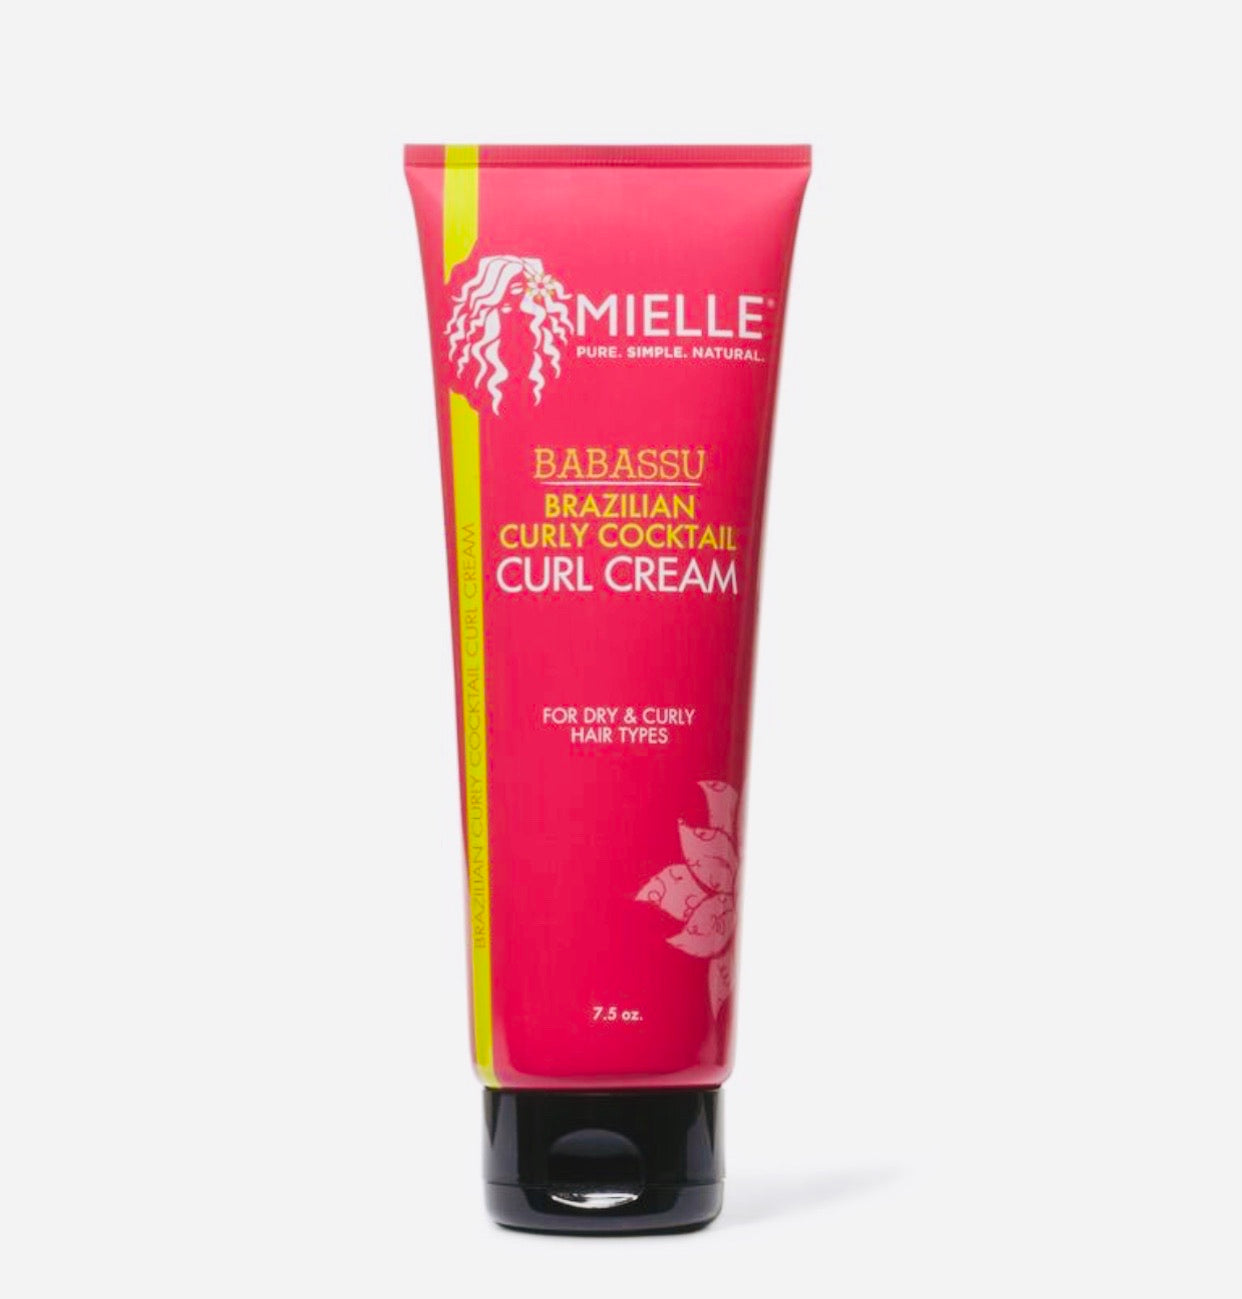 Mielle Babassu Curl Cream